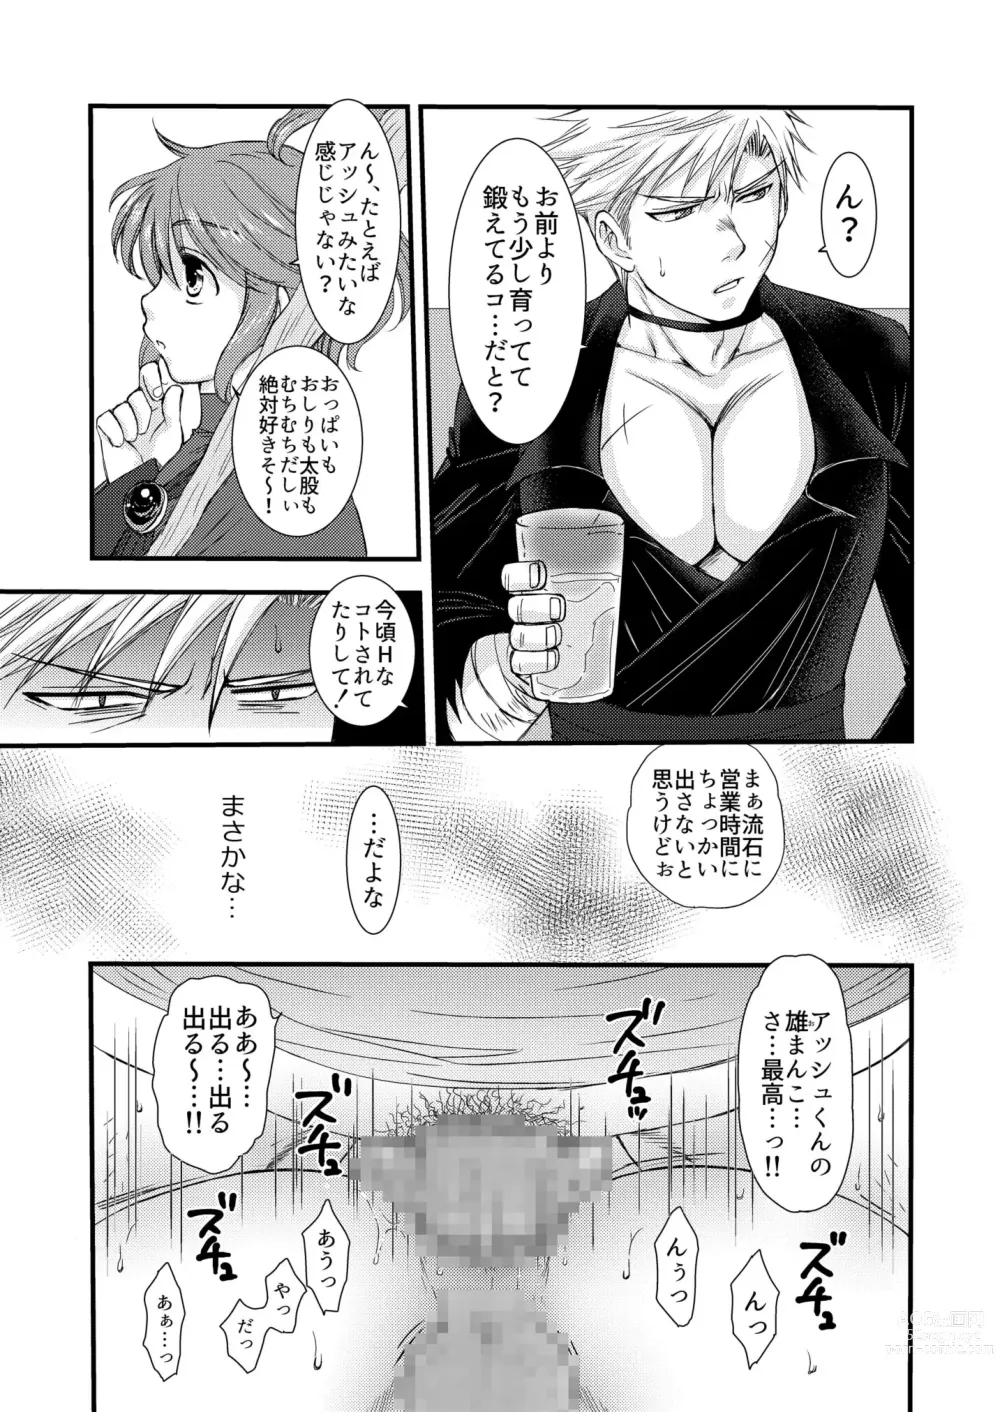 Page 31 of doujinshi Benshoushiro ga Tarinakute